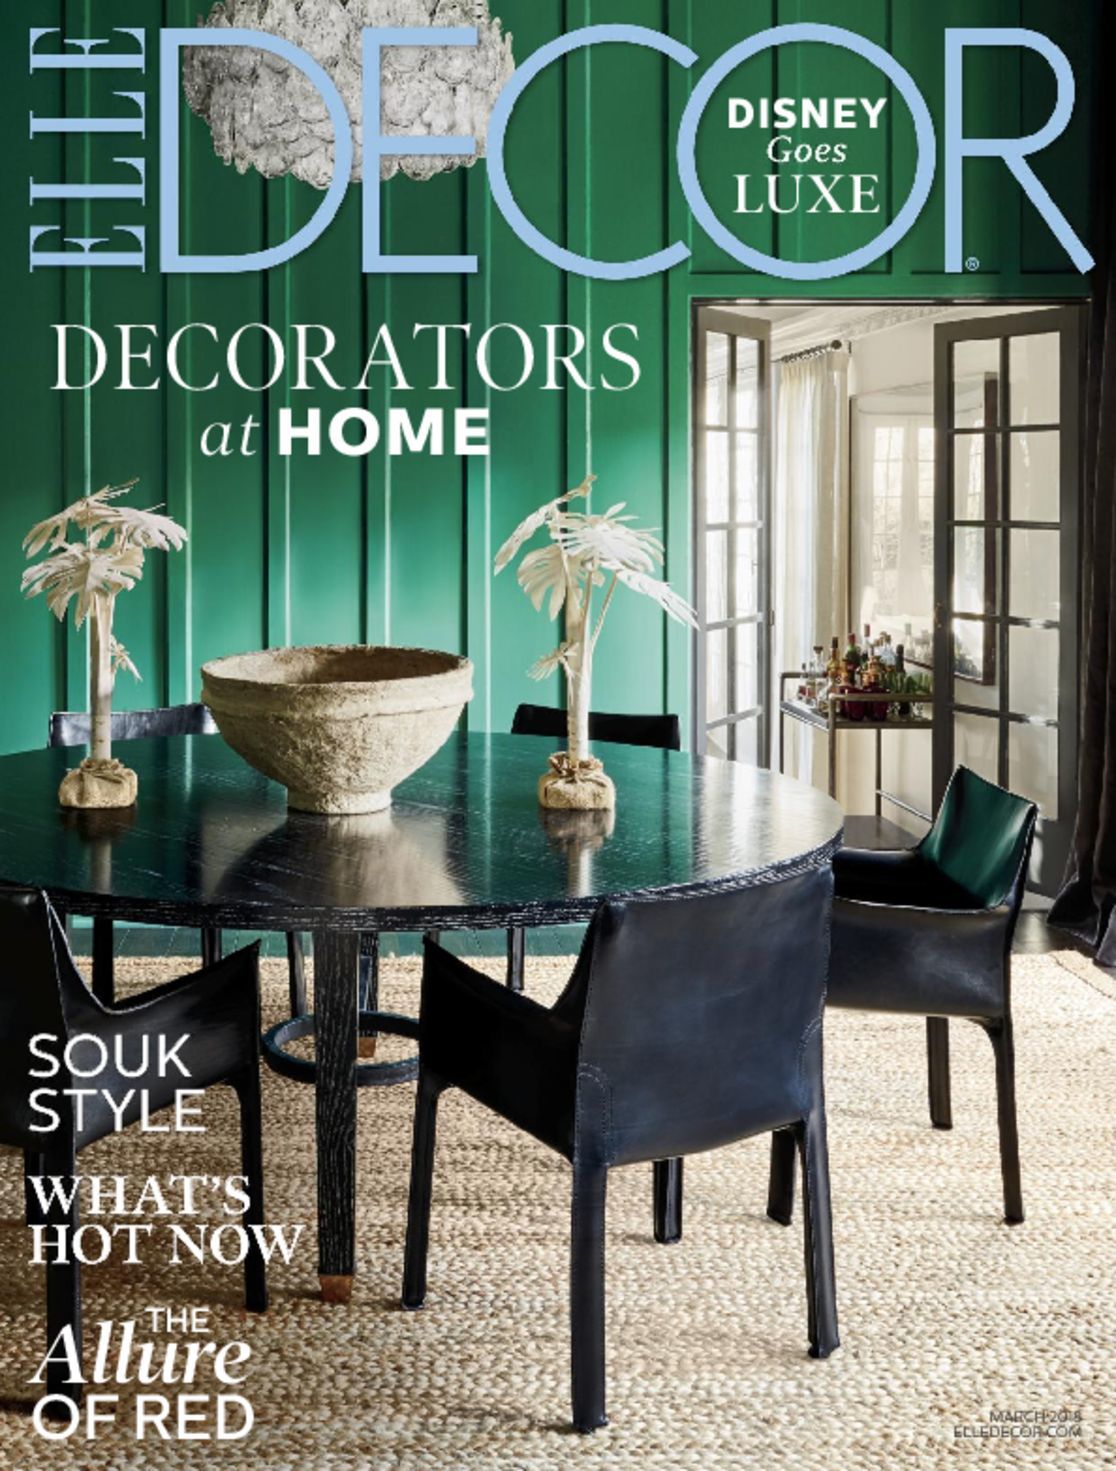 Elle Decor Magazine Home Decorating Ideas